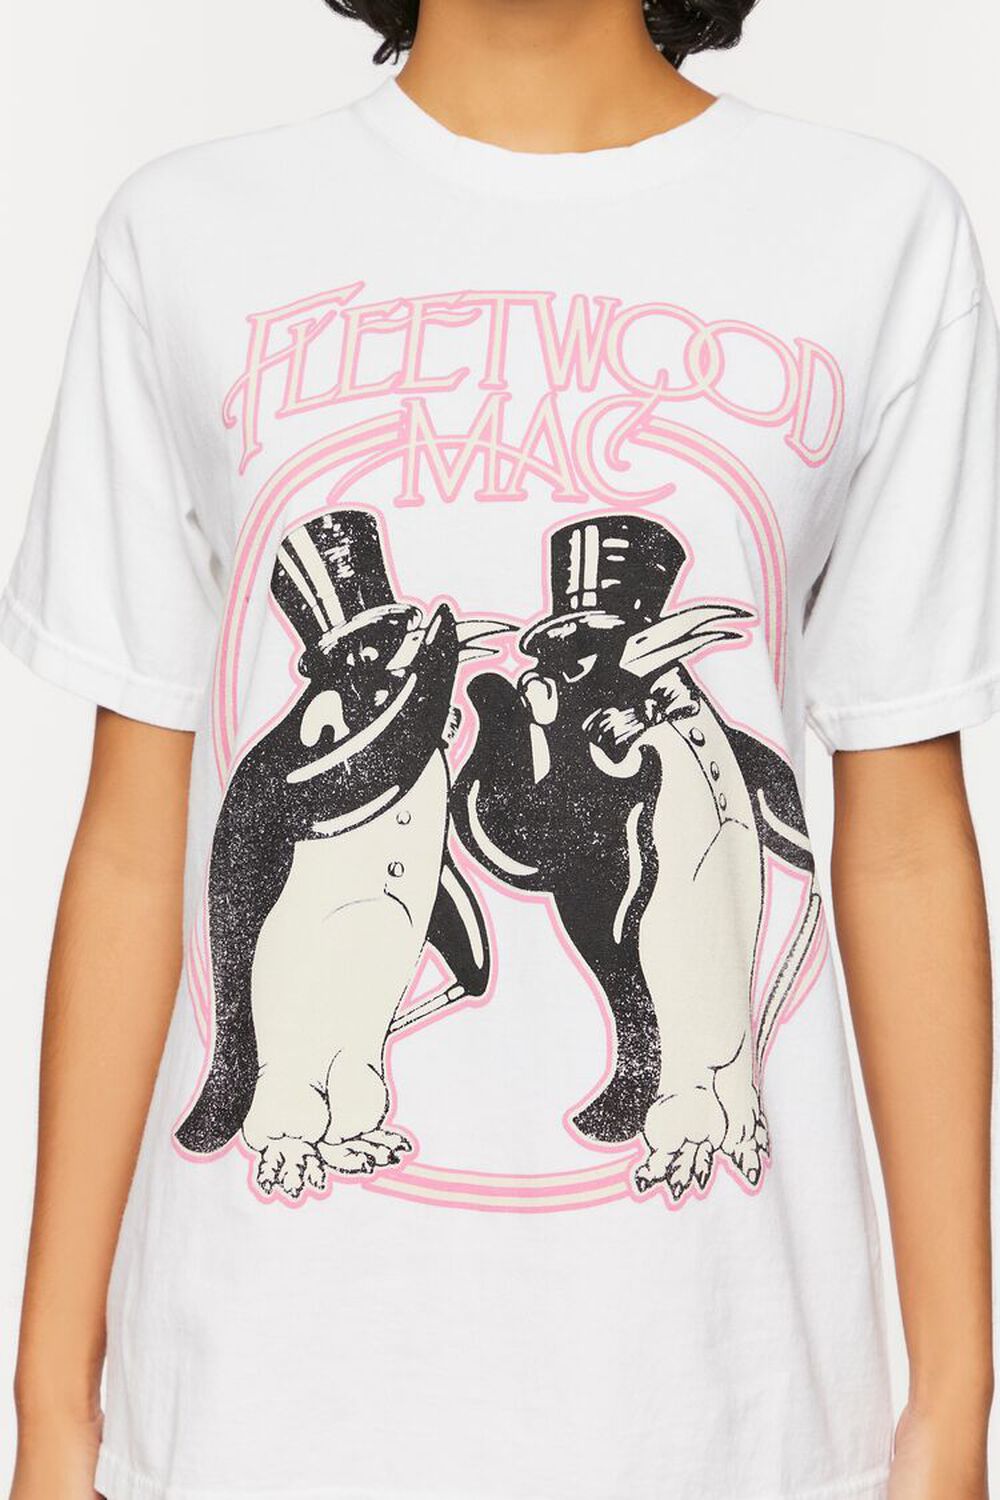 Men's Fleetwood Mac Short Sleeve Graphic T-Shirt - White S